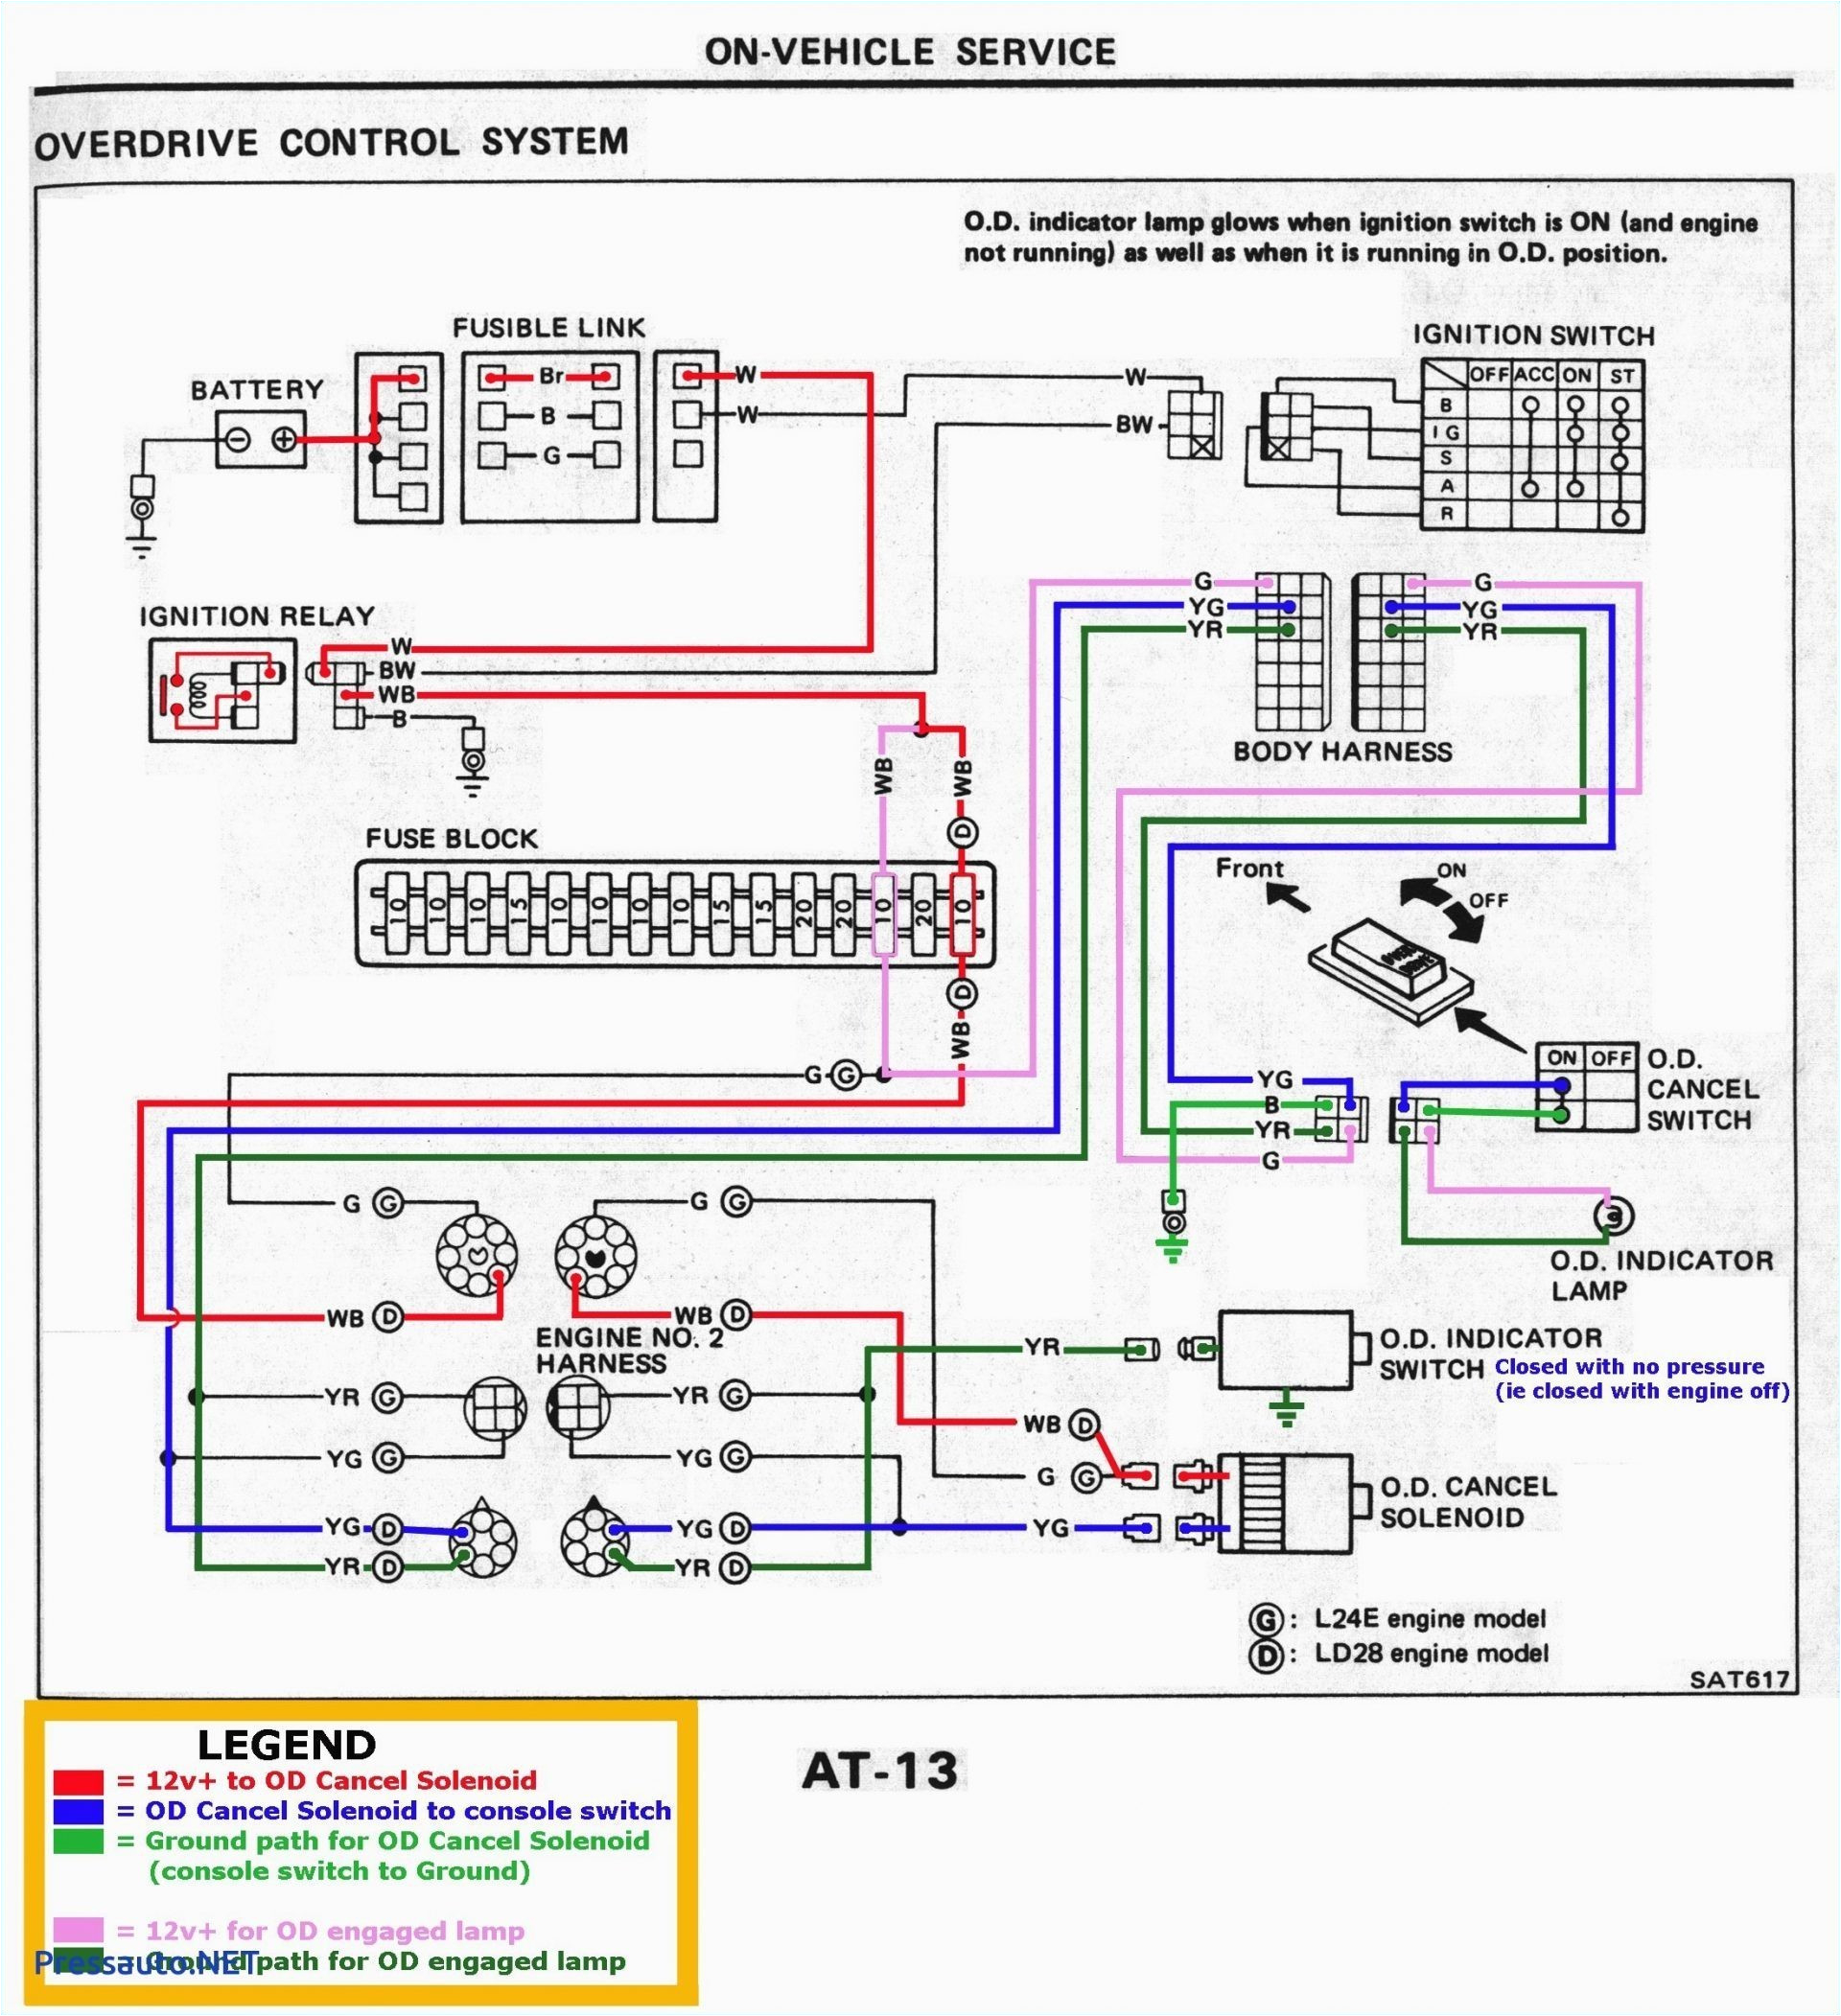 02 dodge ram sel wiring harness diagram wiring diagram view 2000 dodge sel wiring diagram